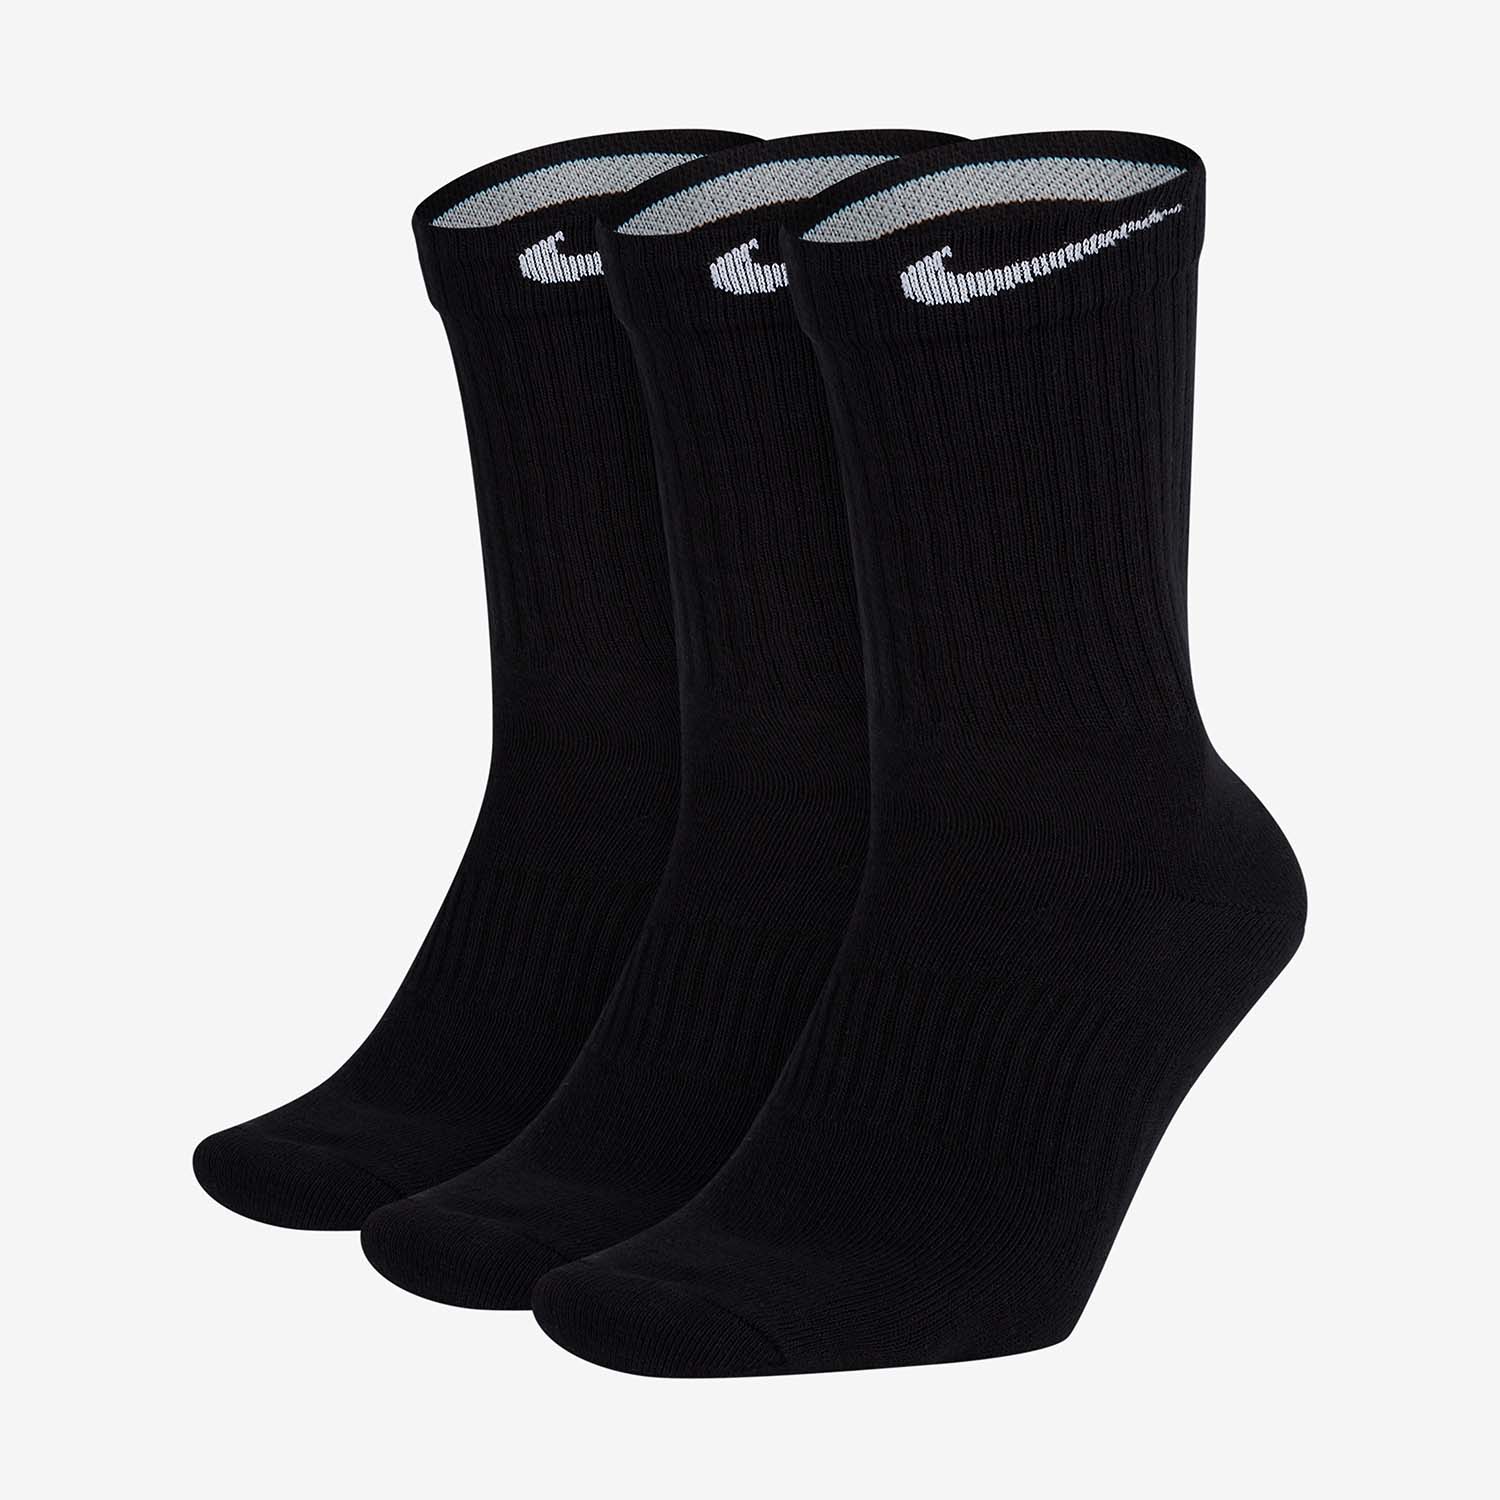 Nike Performance Lightweight Crew x 3 Socks - Black